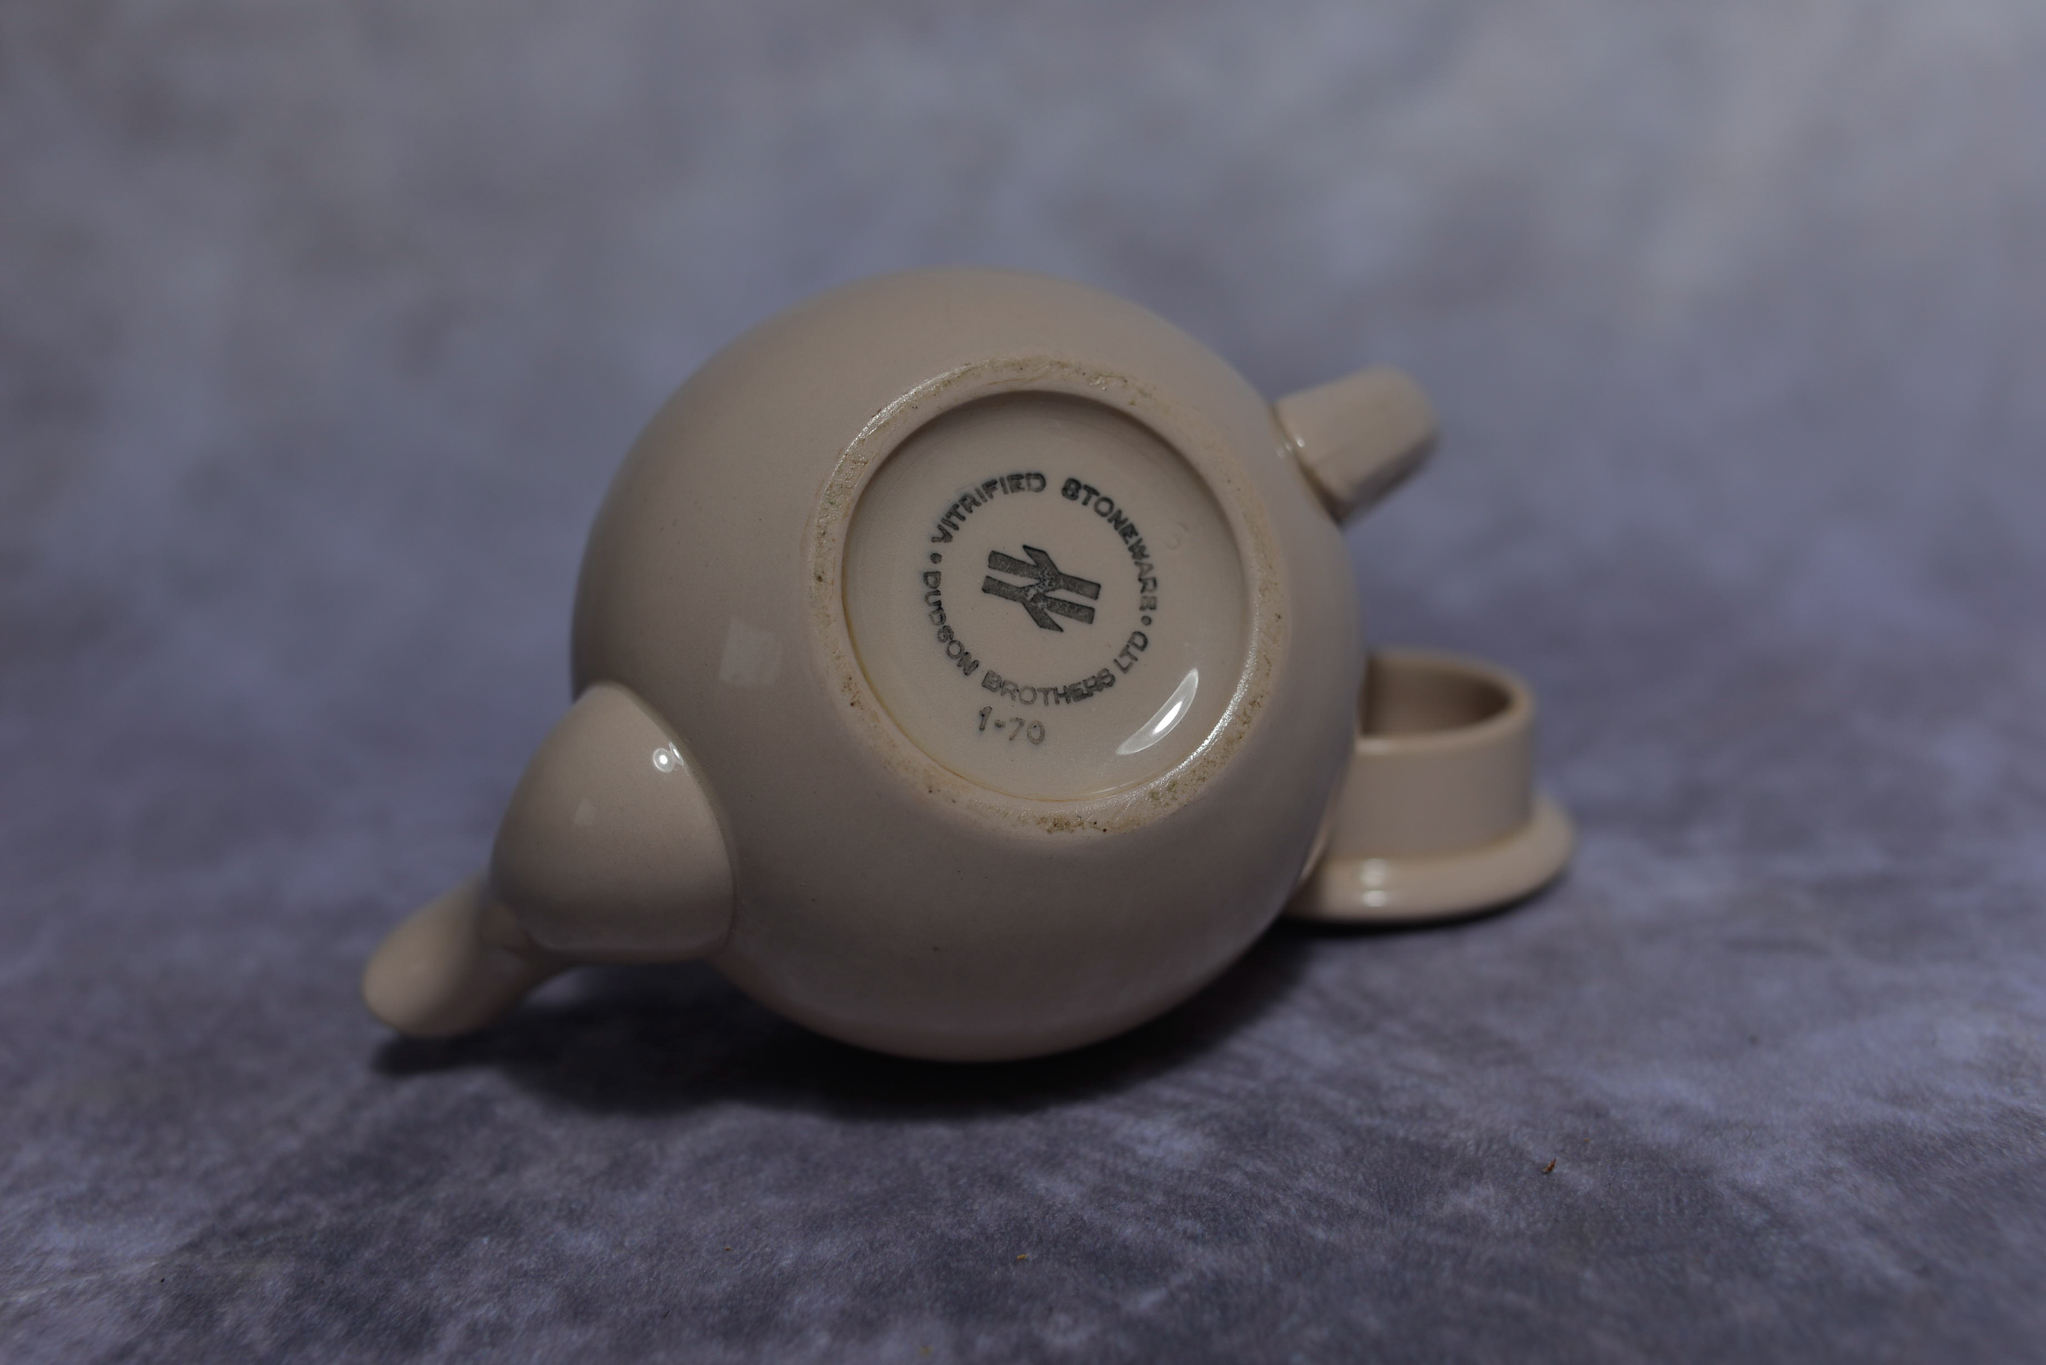 Vintage British Rail teapot - Image 2 of 2